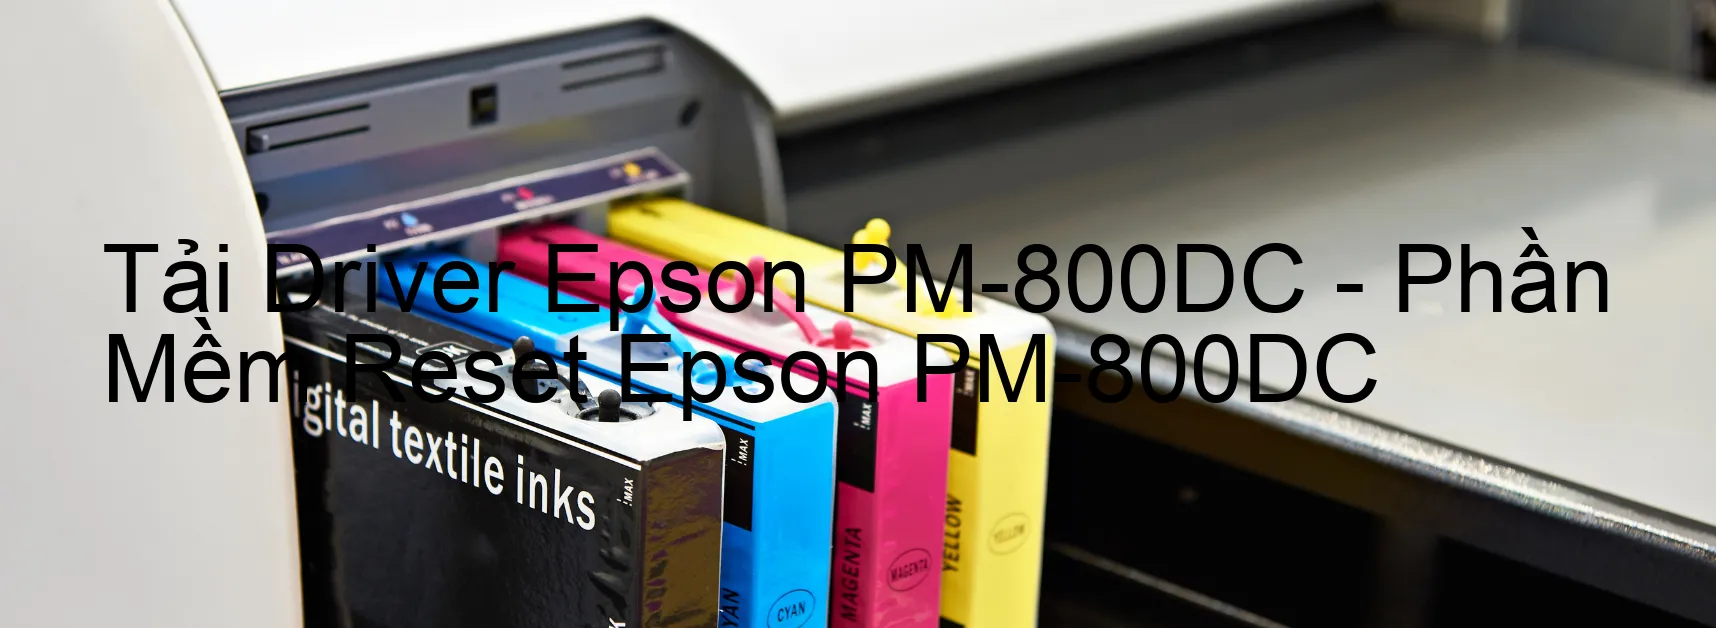 Driver Epson PM-800DC, Phần Mềm Reset Epson PM-800DC